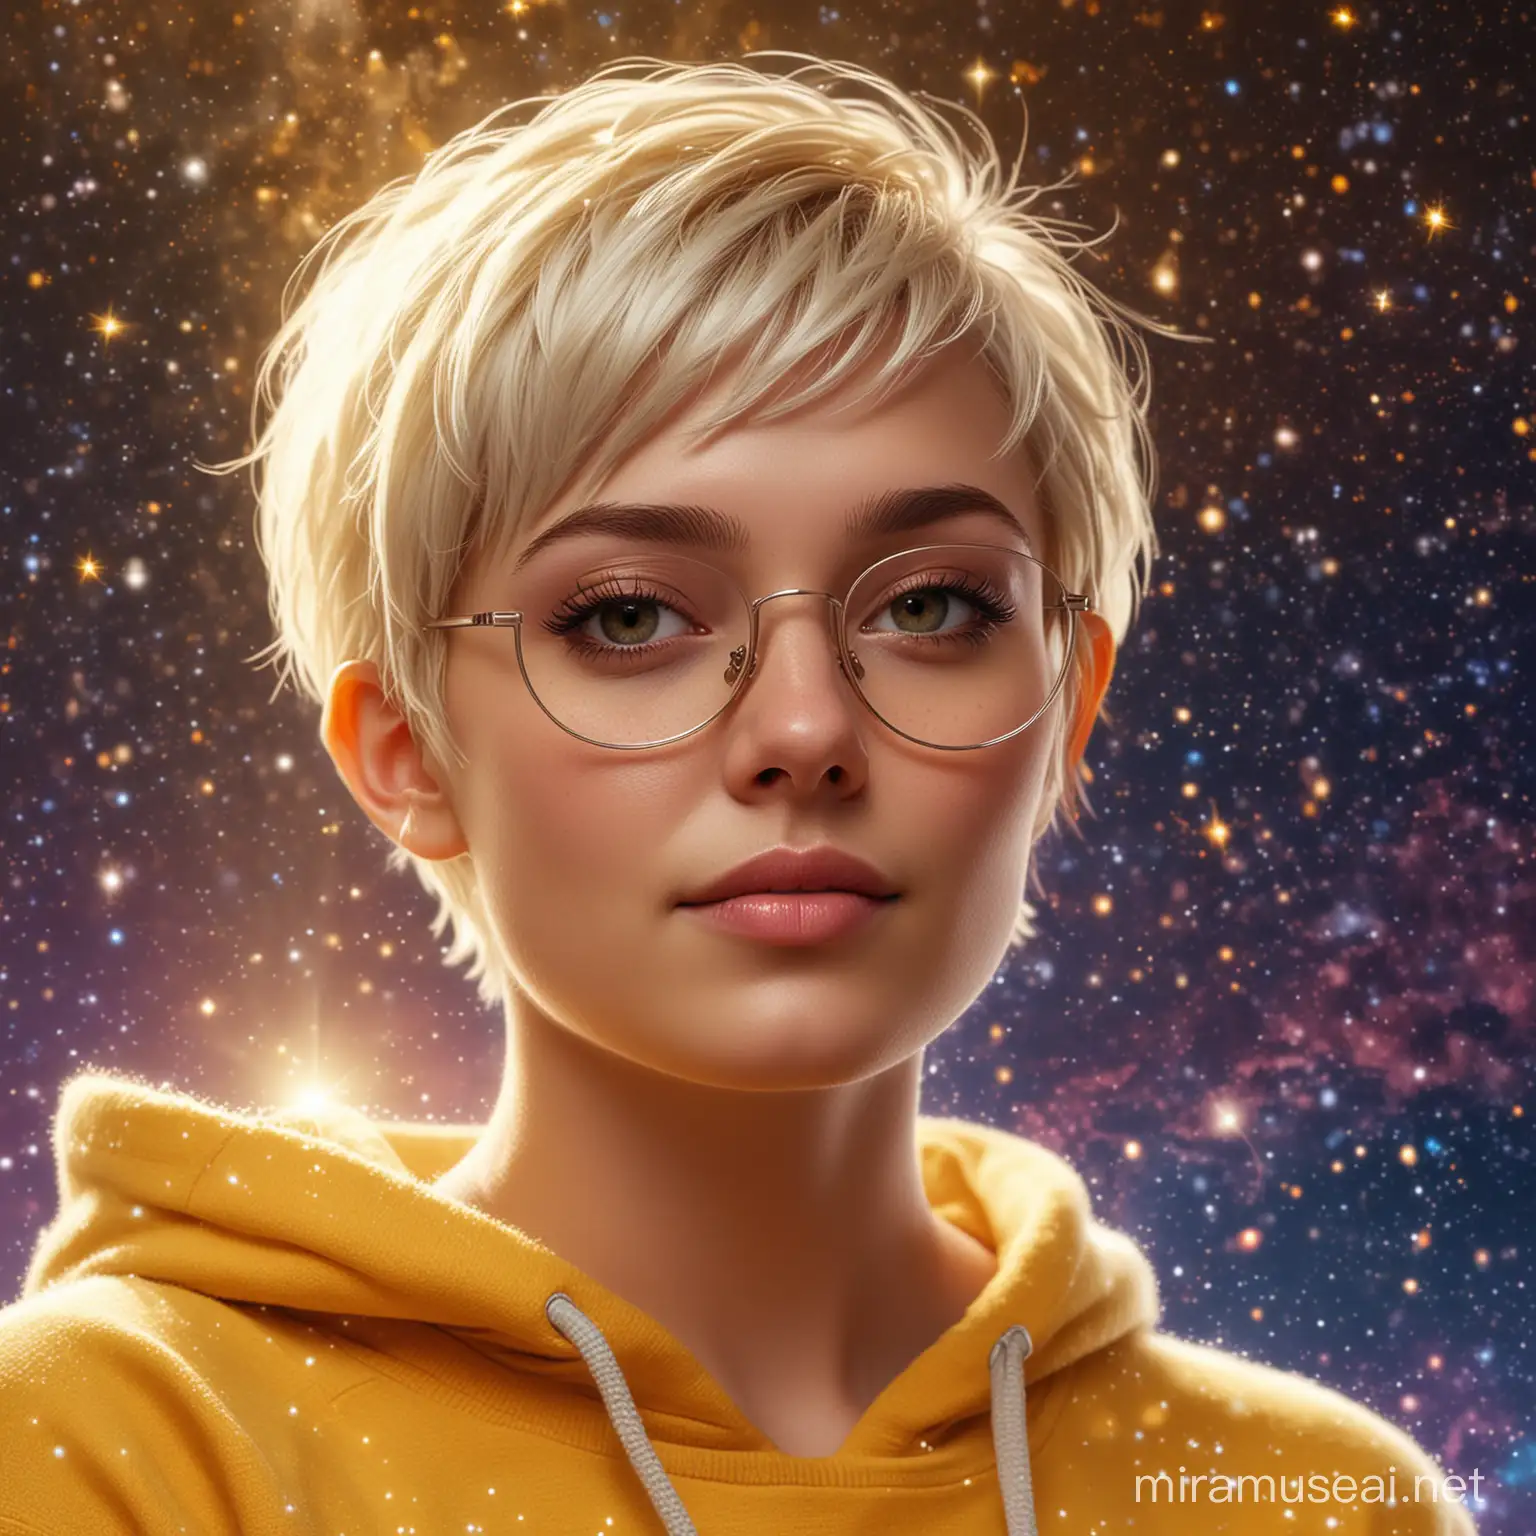 Blonde Woman in Yellow Hoodie Enjoying Galactic Dreamscape